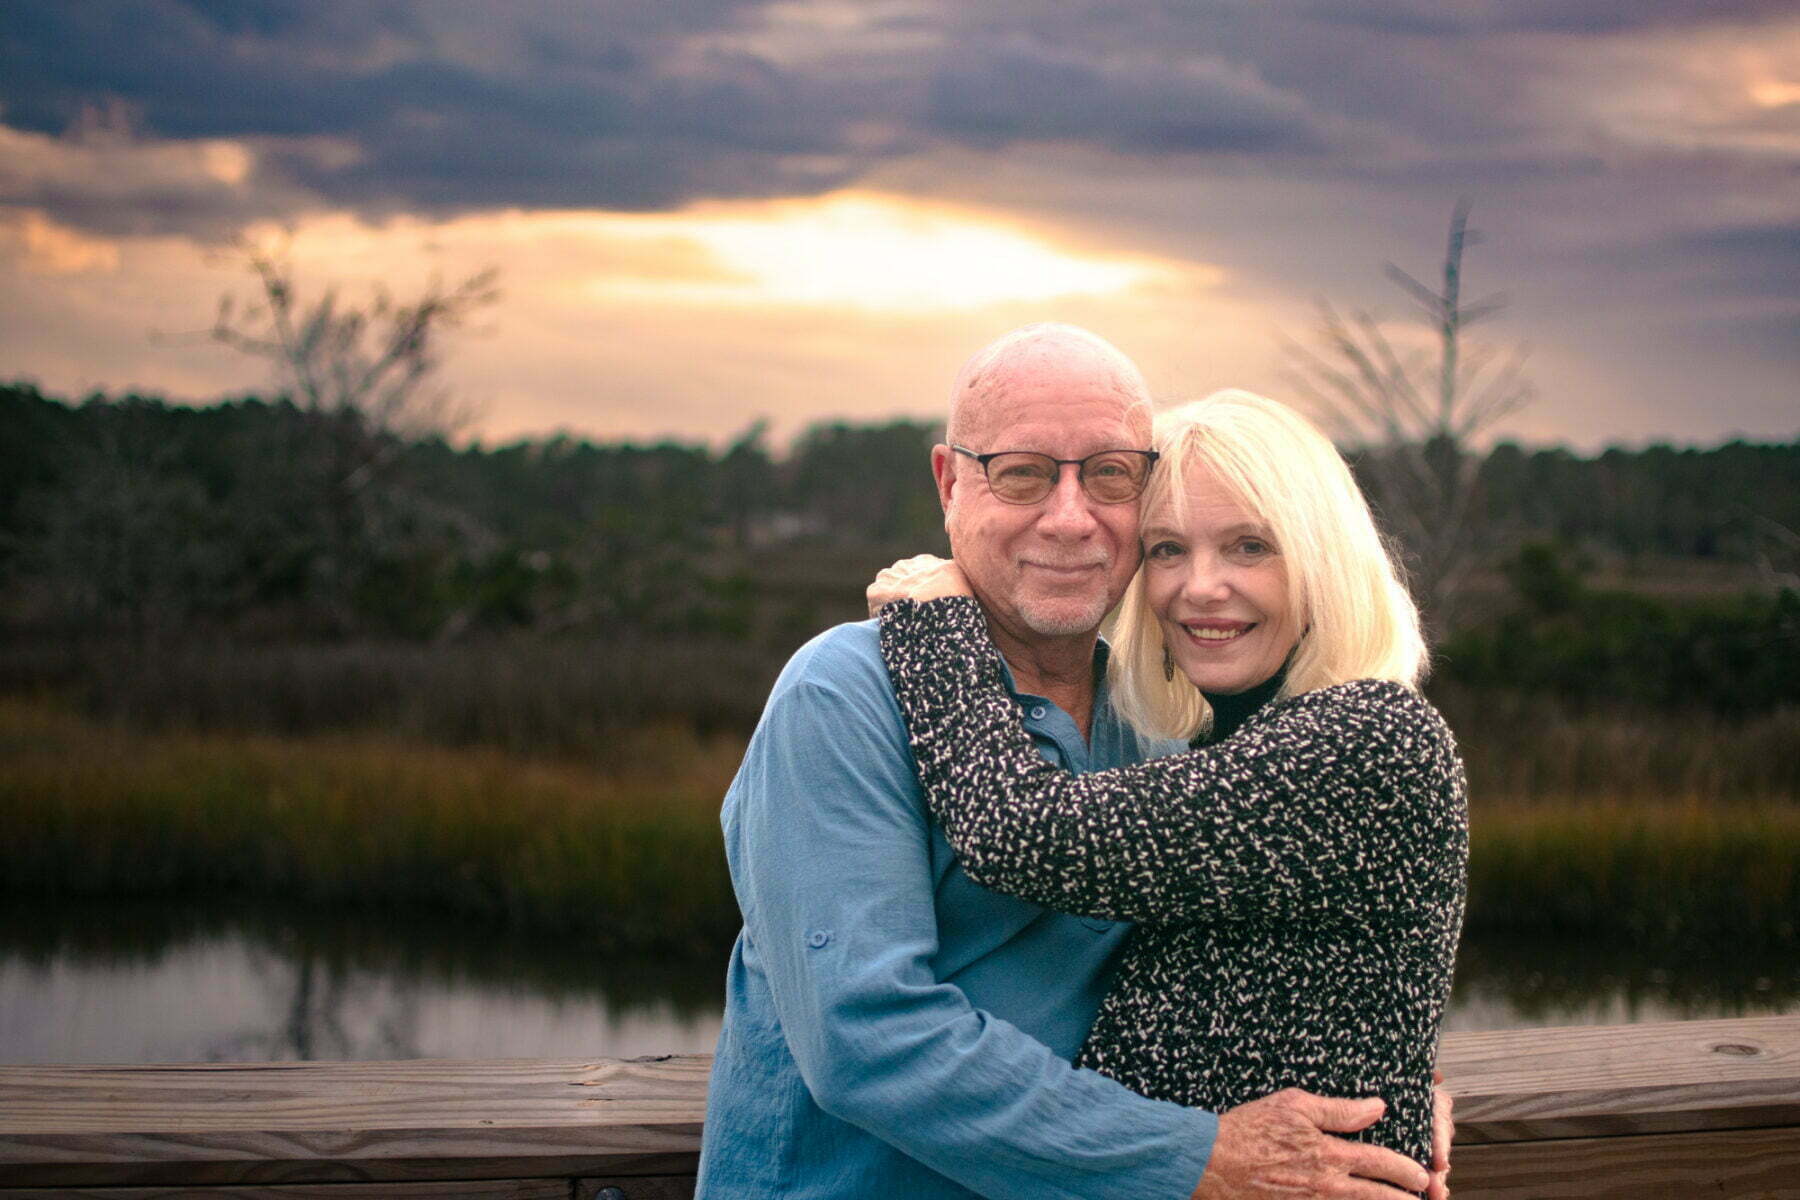 Adventure couples portrait photography session along the Shallotte River, NC.